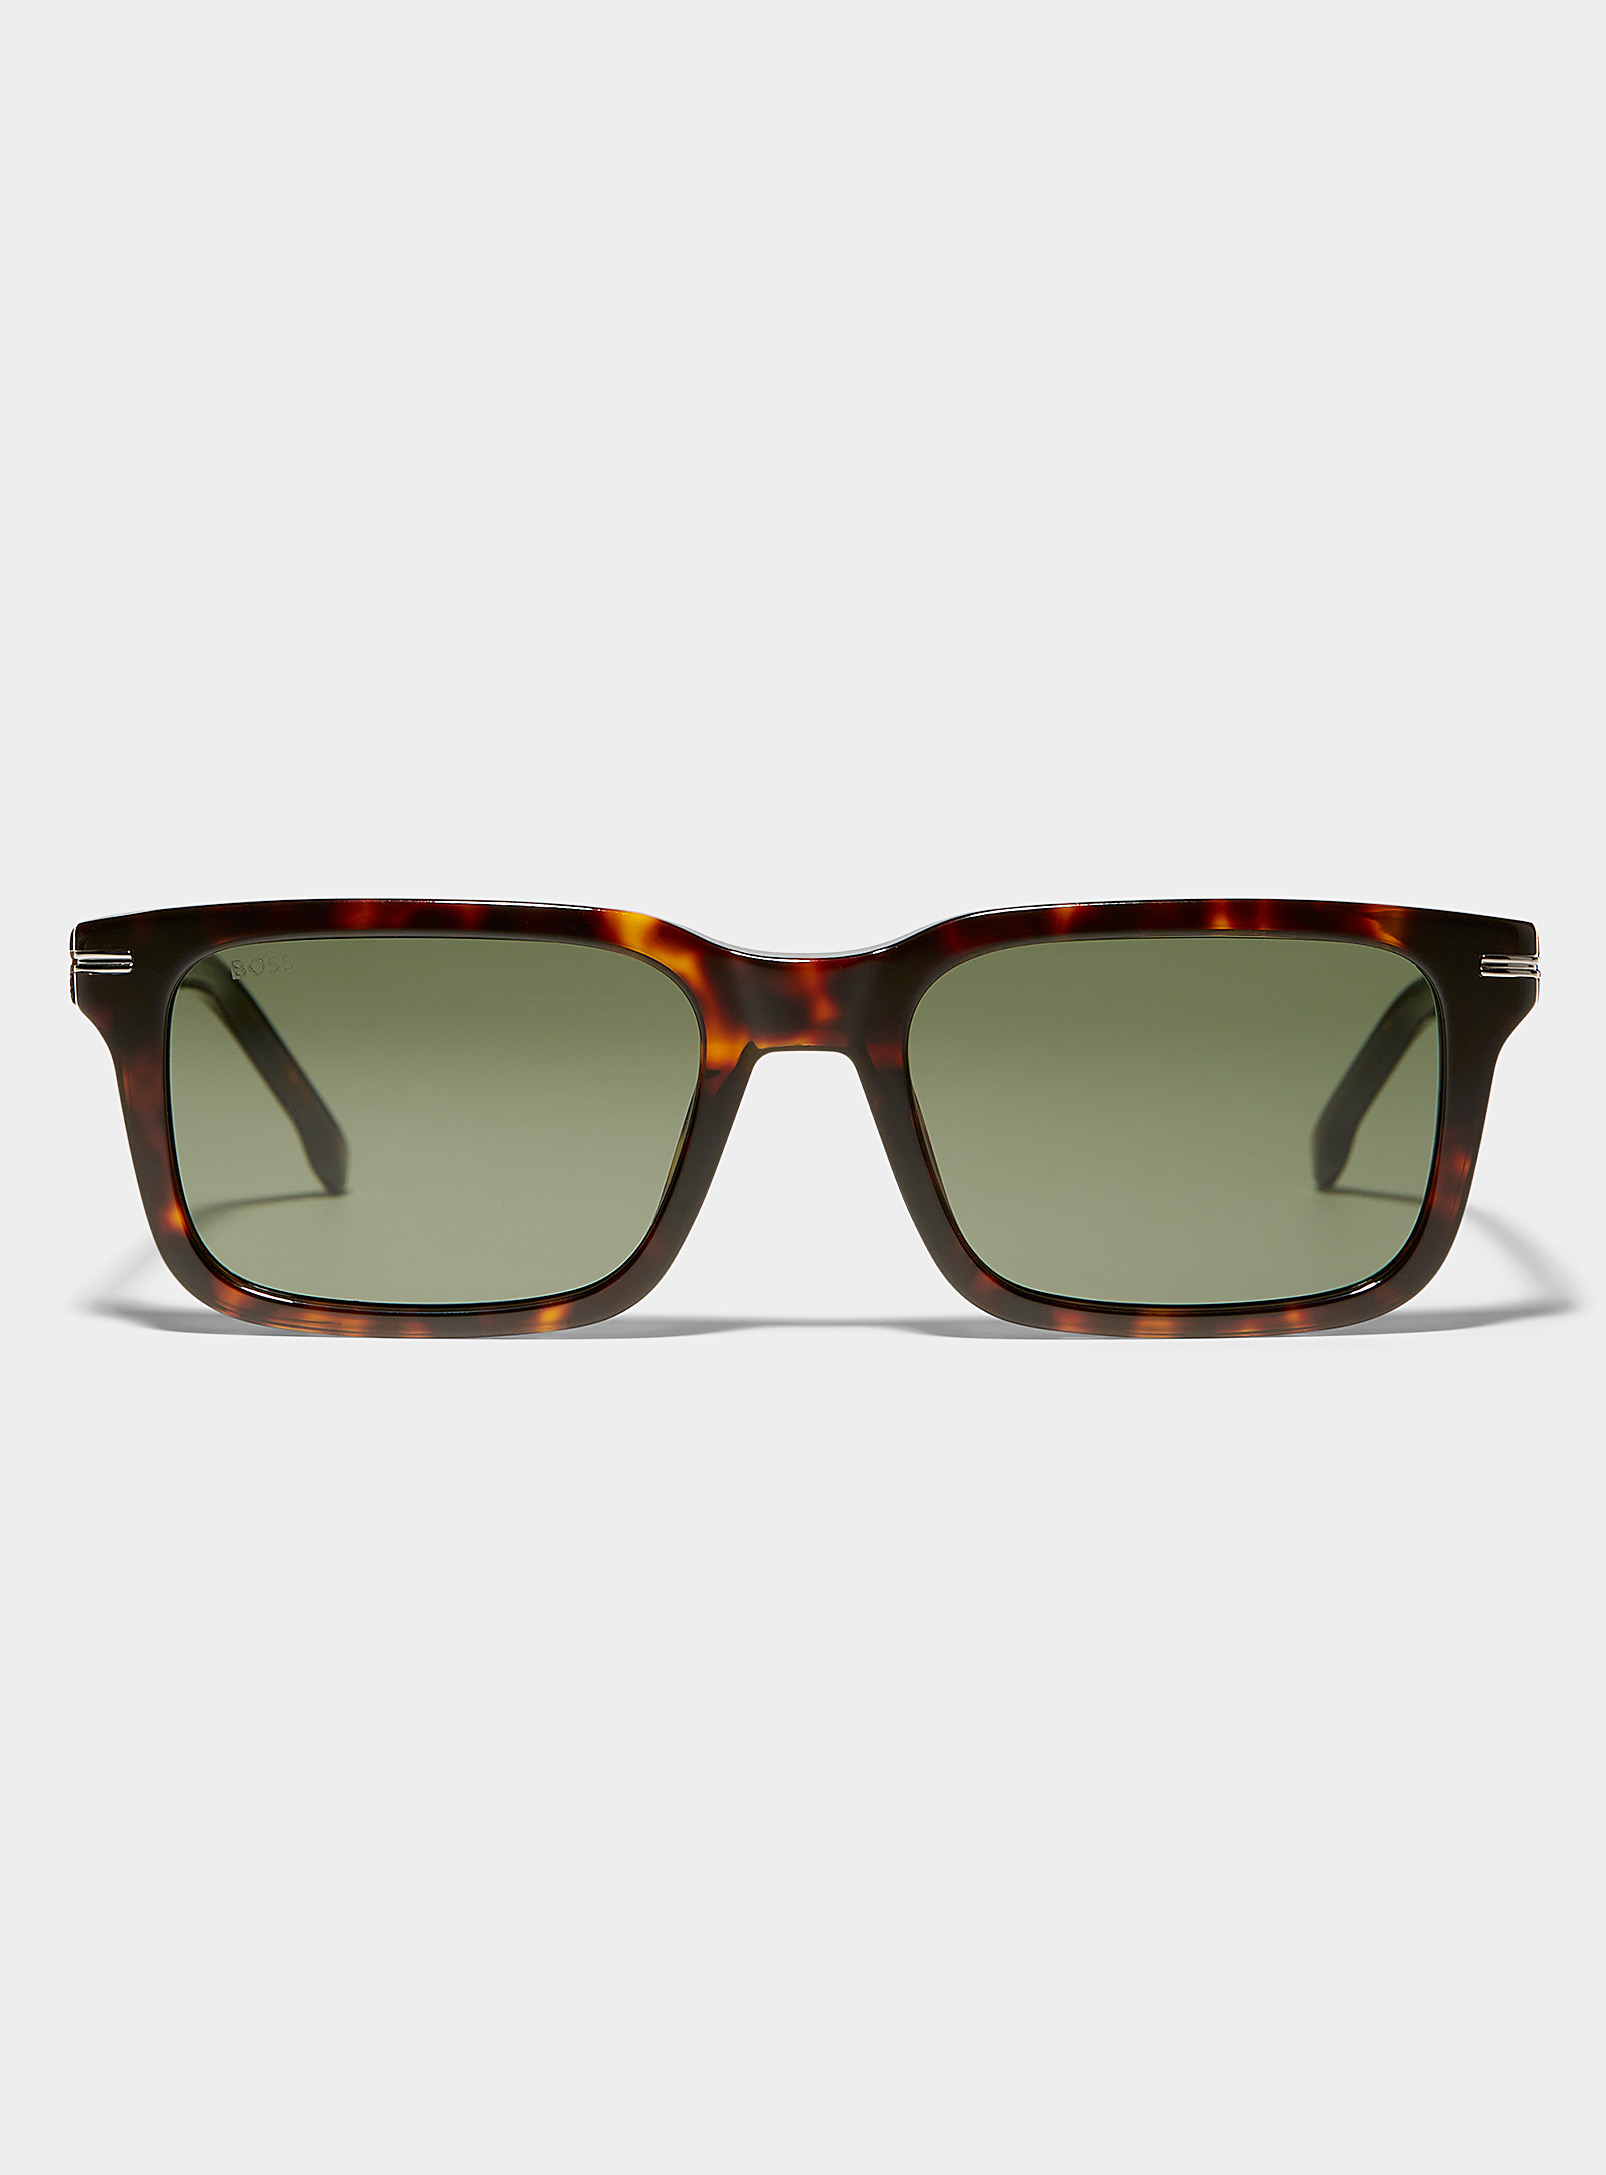 Hugo Boss Tortoiseshell Sunglasses In Brown